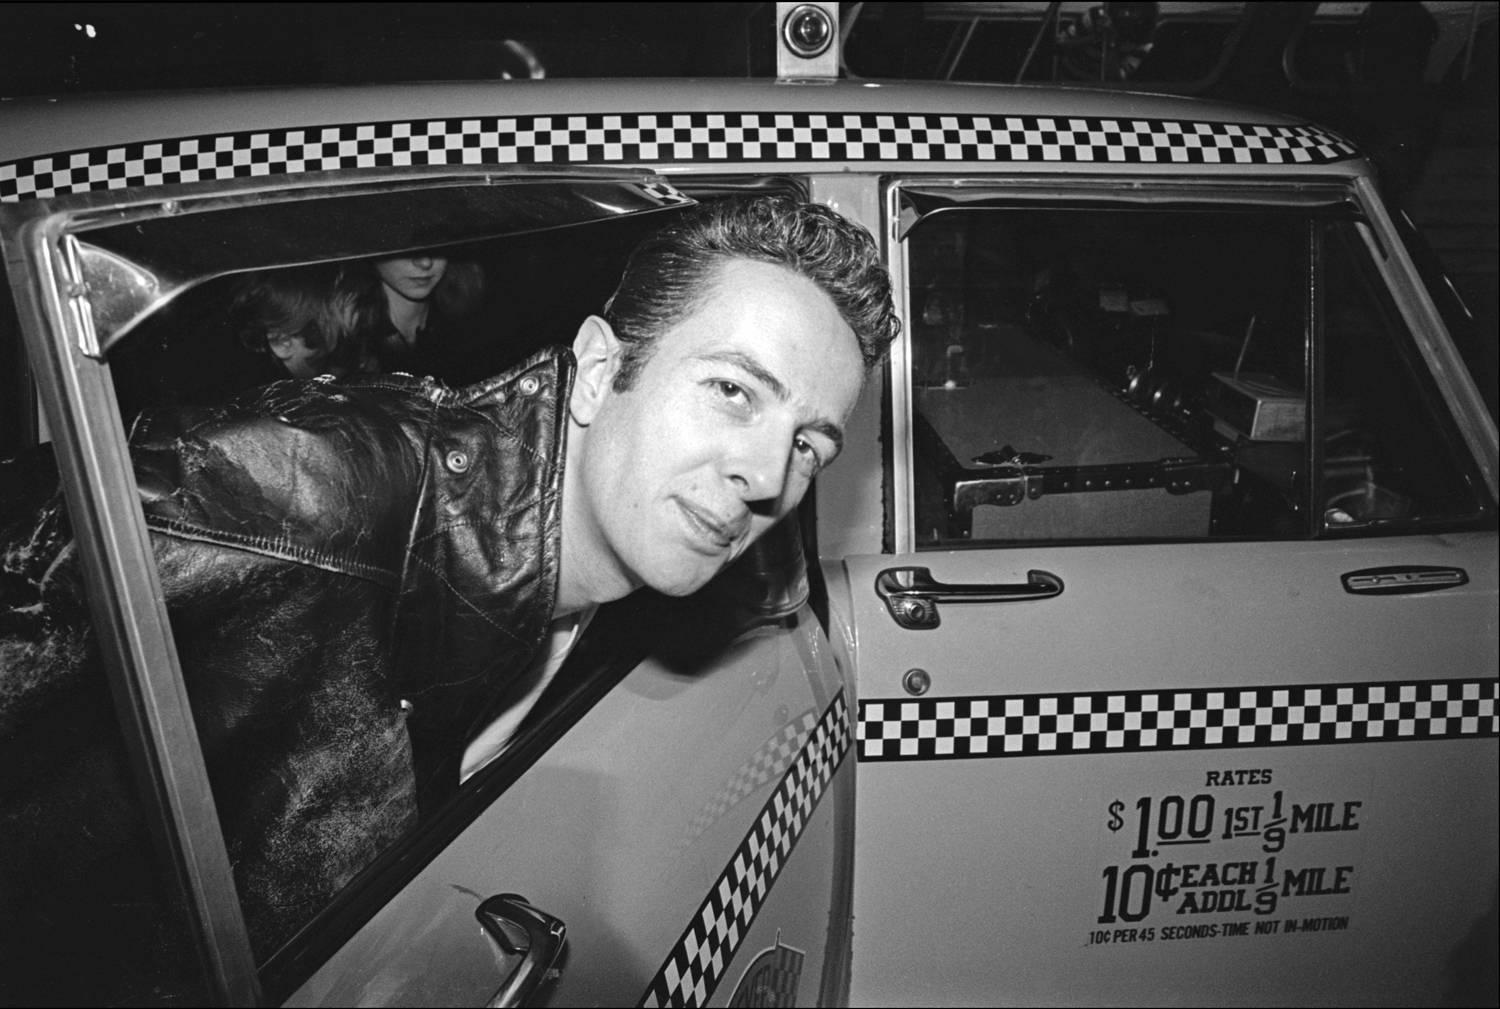 Allan Tannenbaum Black and White Photograph - The Clash arrive at JFK - Joe Strummer getting into a taxi, 1981